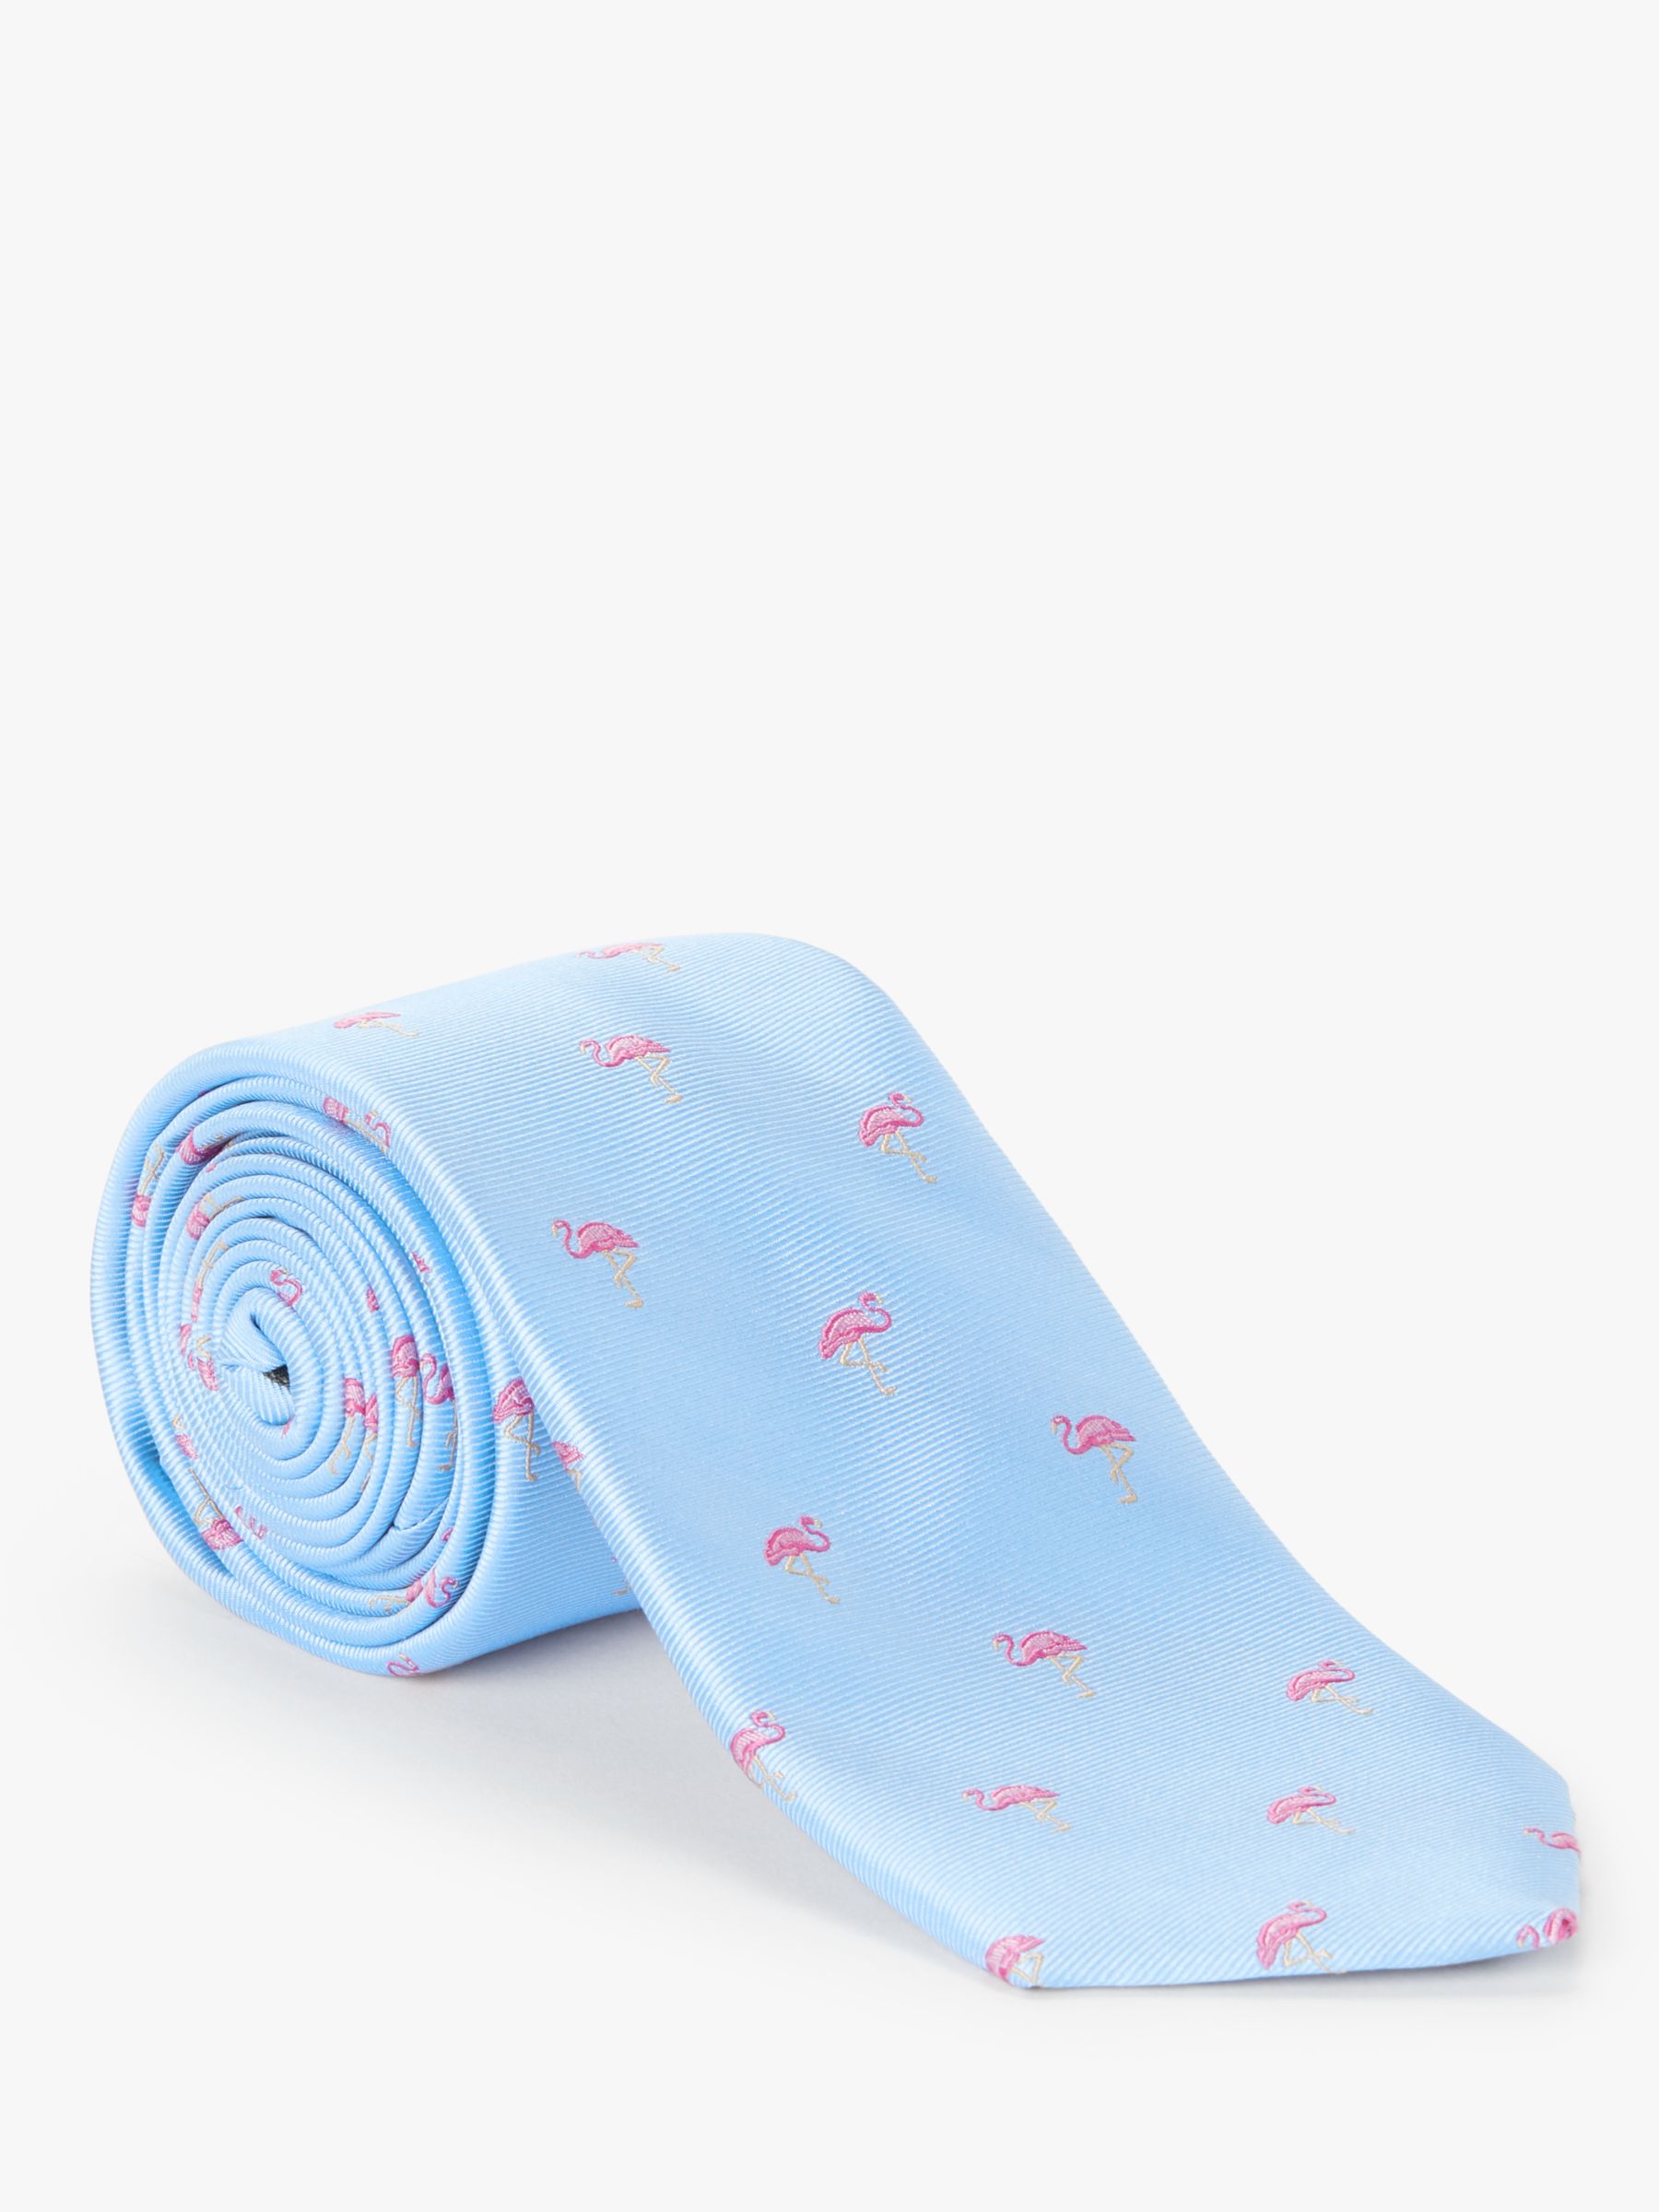 John Lewis & Partners Flamingo Silk Tie, Sky